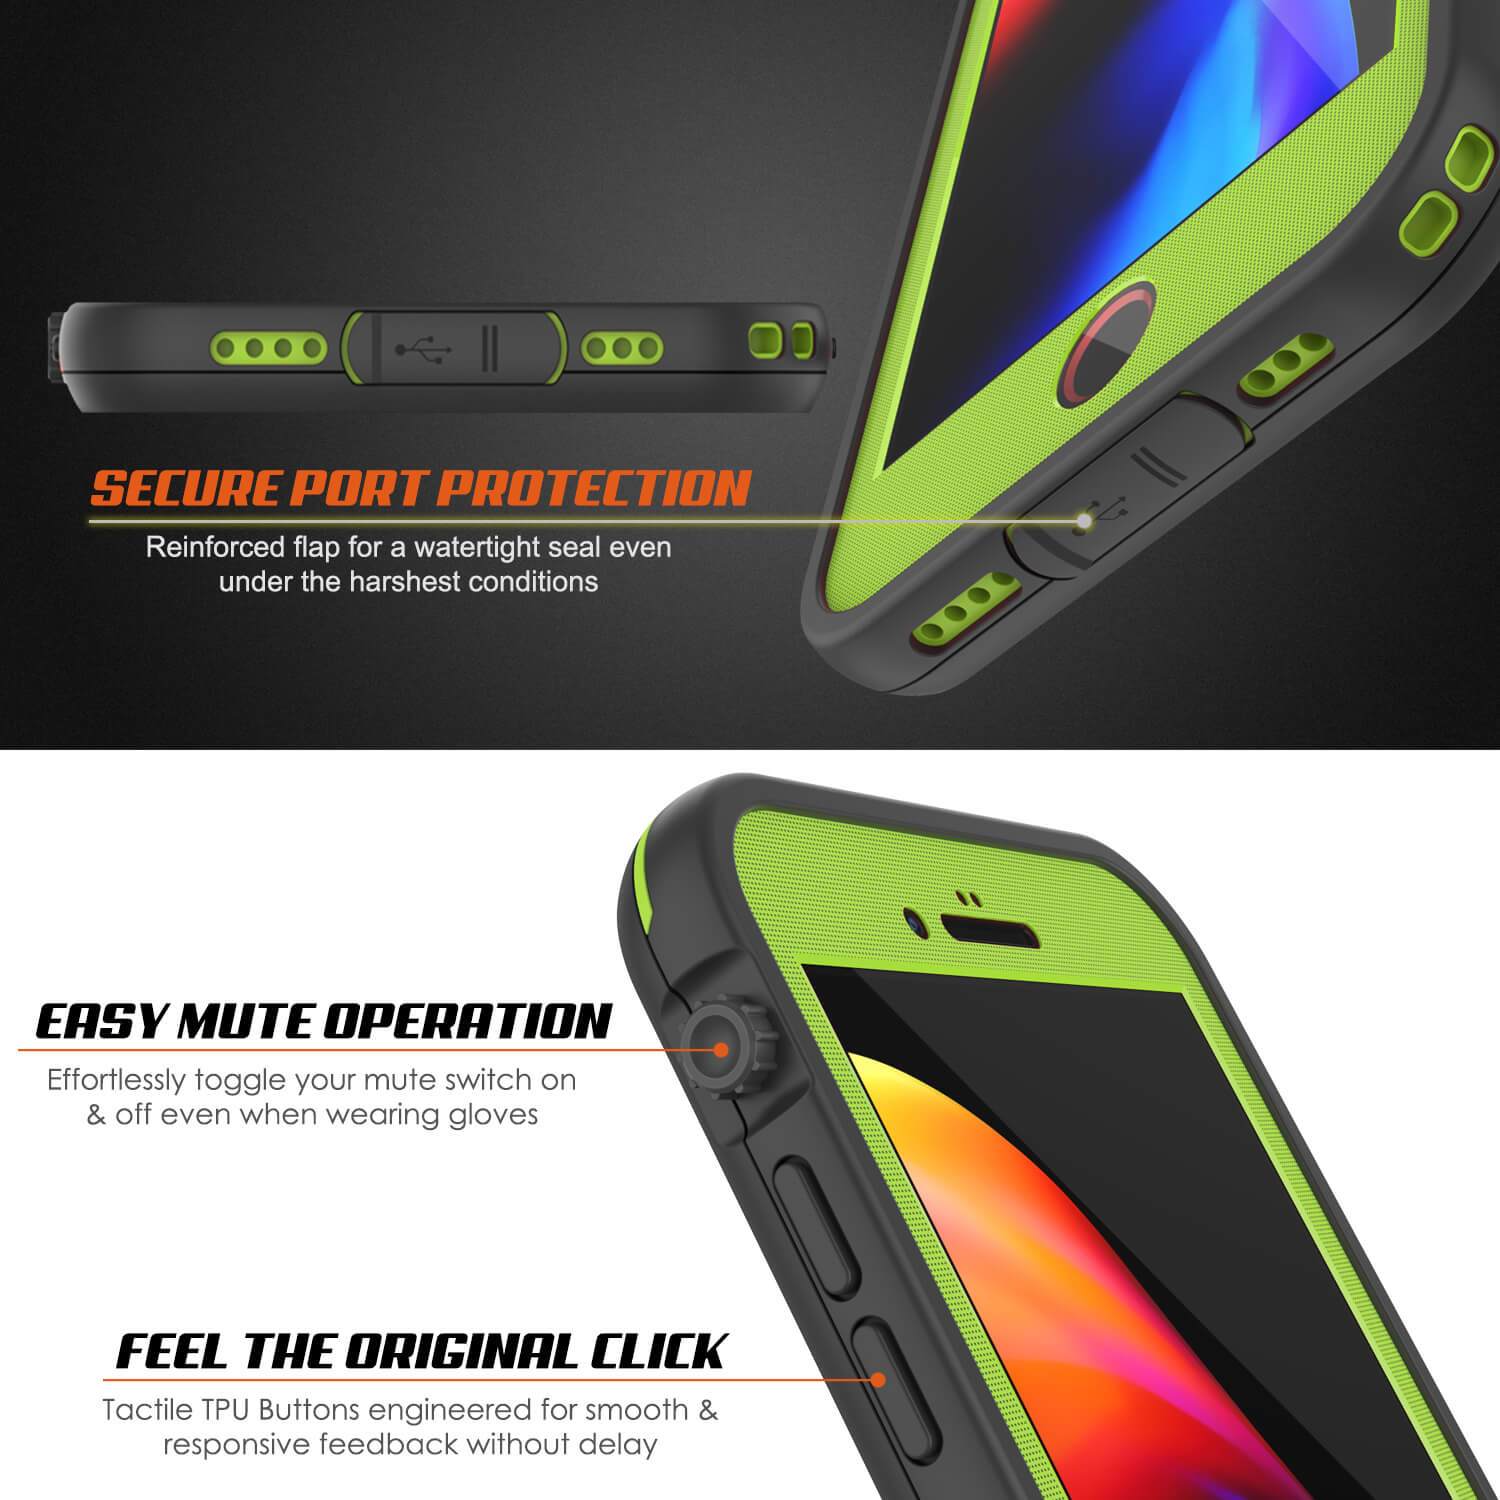 iPhone 8 Plus Waterproof Case, Punkcase SpikeStar Light-Green Series